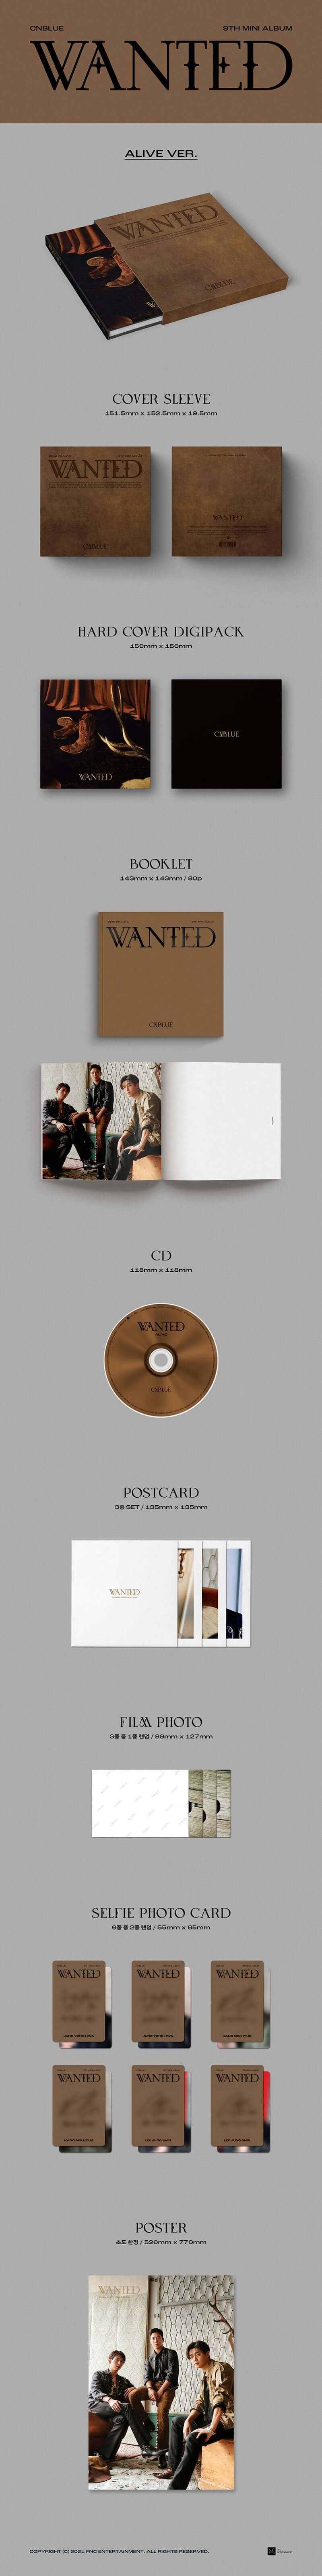 CNBLUE - WANTED (9th Mini Album)